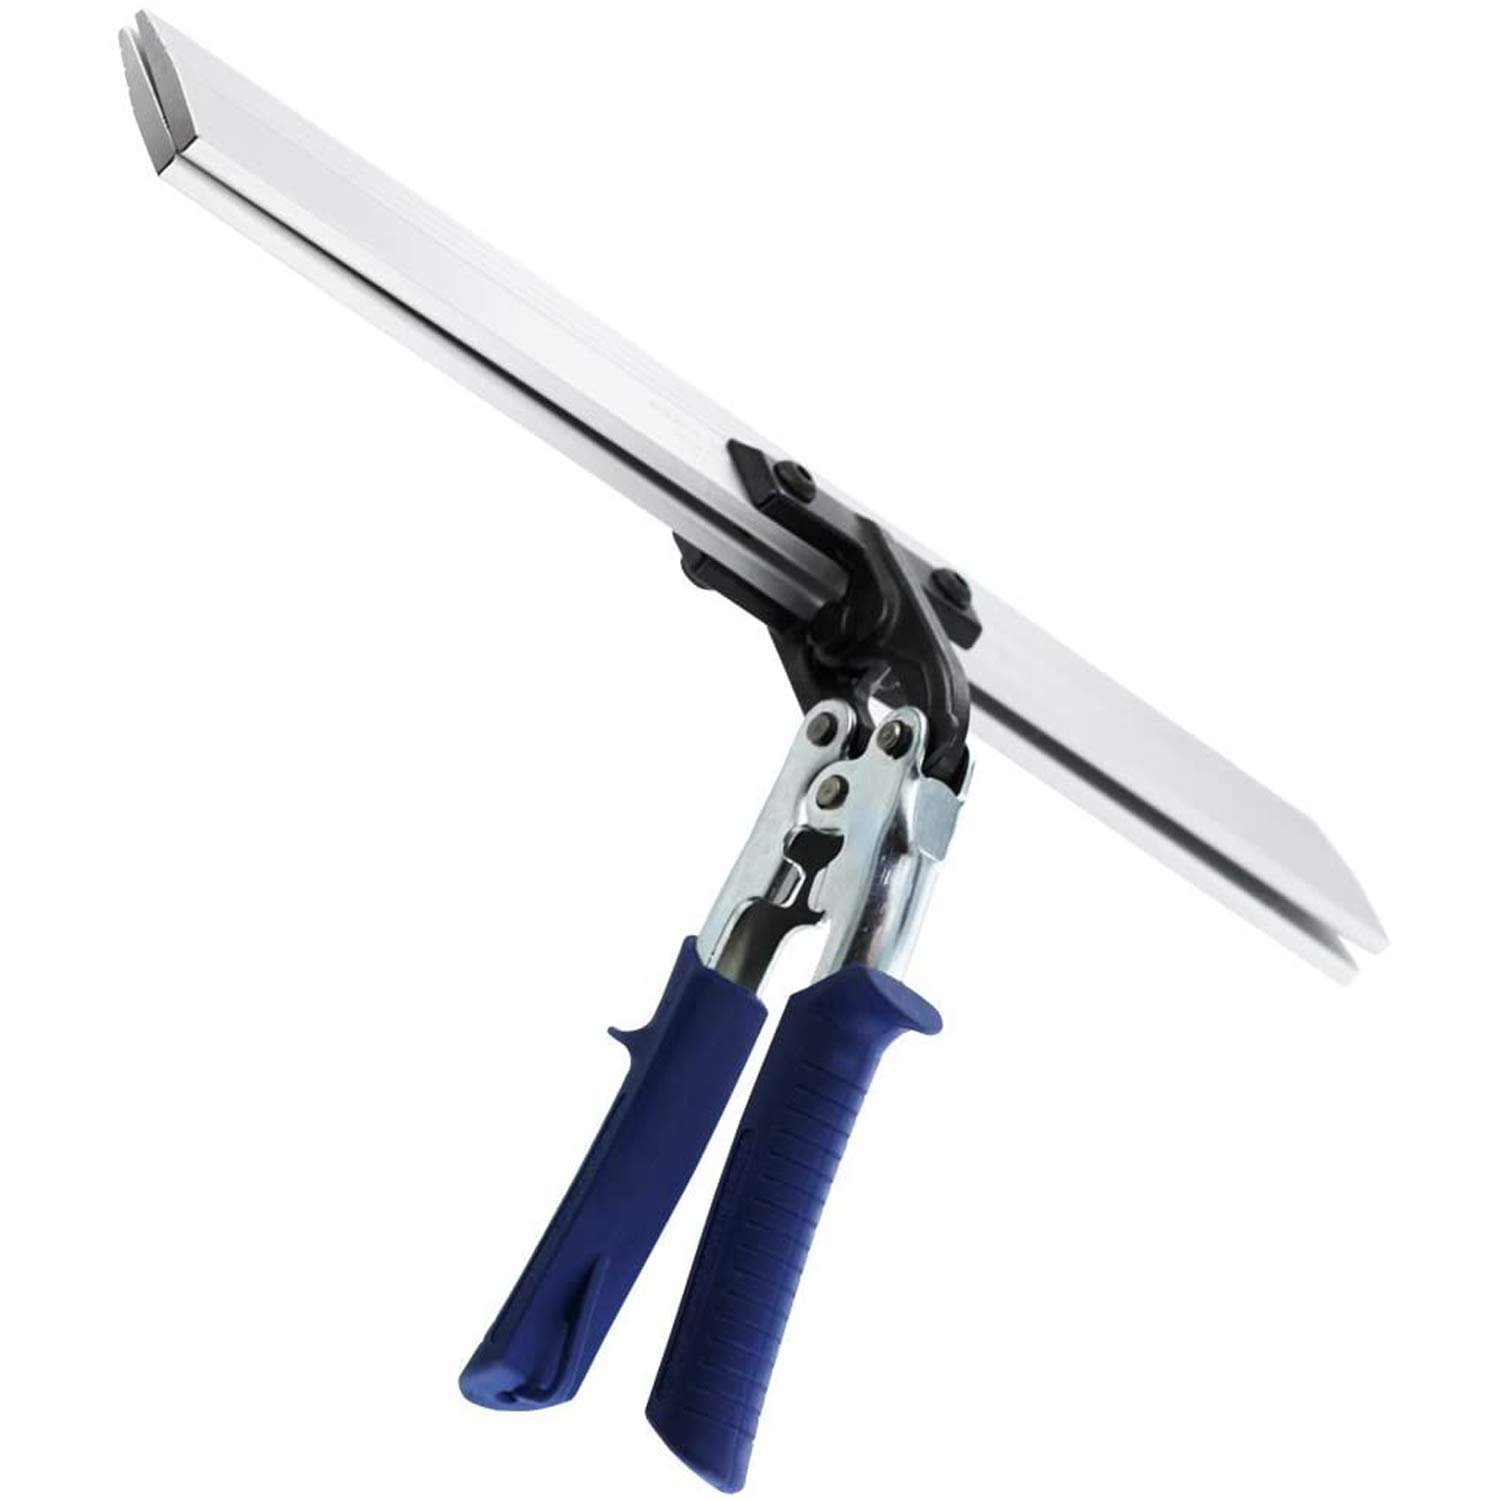 Midwest Tool Cutlery Seamer - 15 Inch Offset Sheet Metal Bender with Aluminum Blades KUSHN-POWER Comfort Grip Handle - M